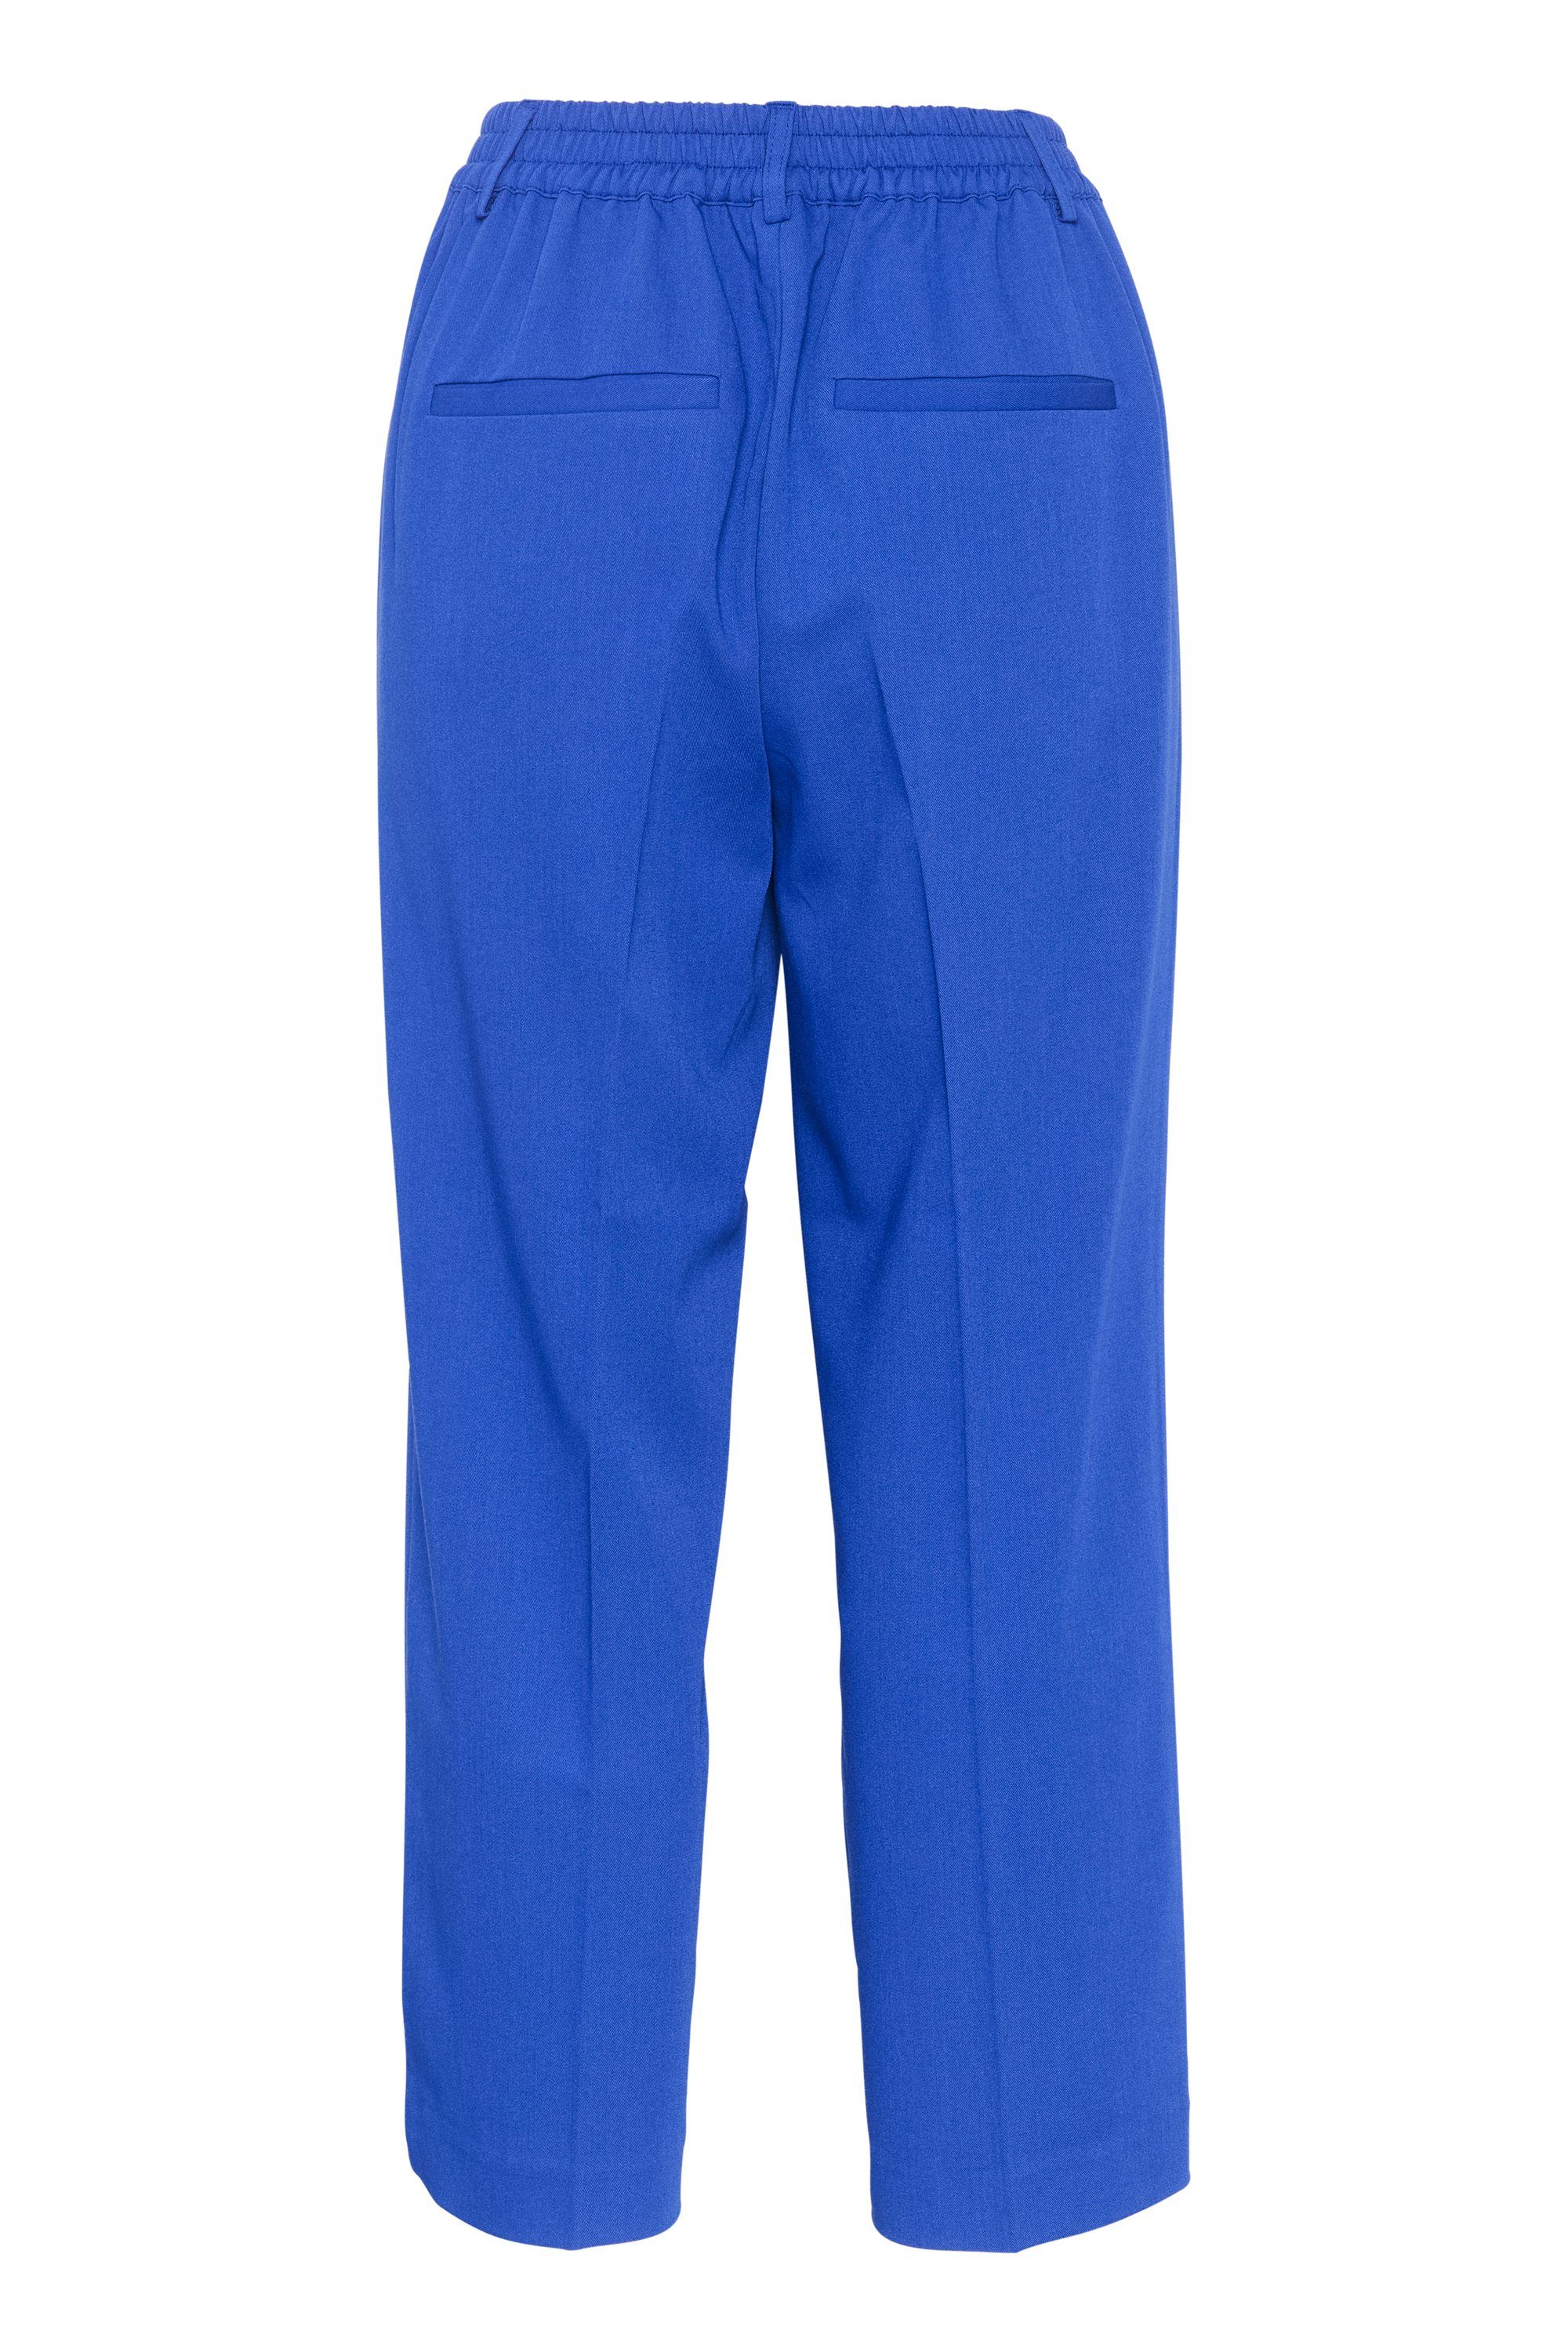 KAFFE Anzughose Pants KAsakura Suiting Blue Clematis